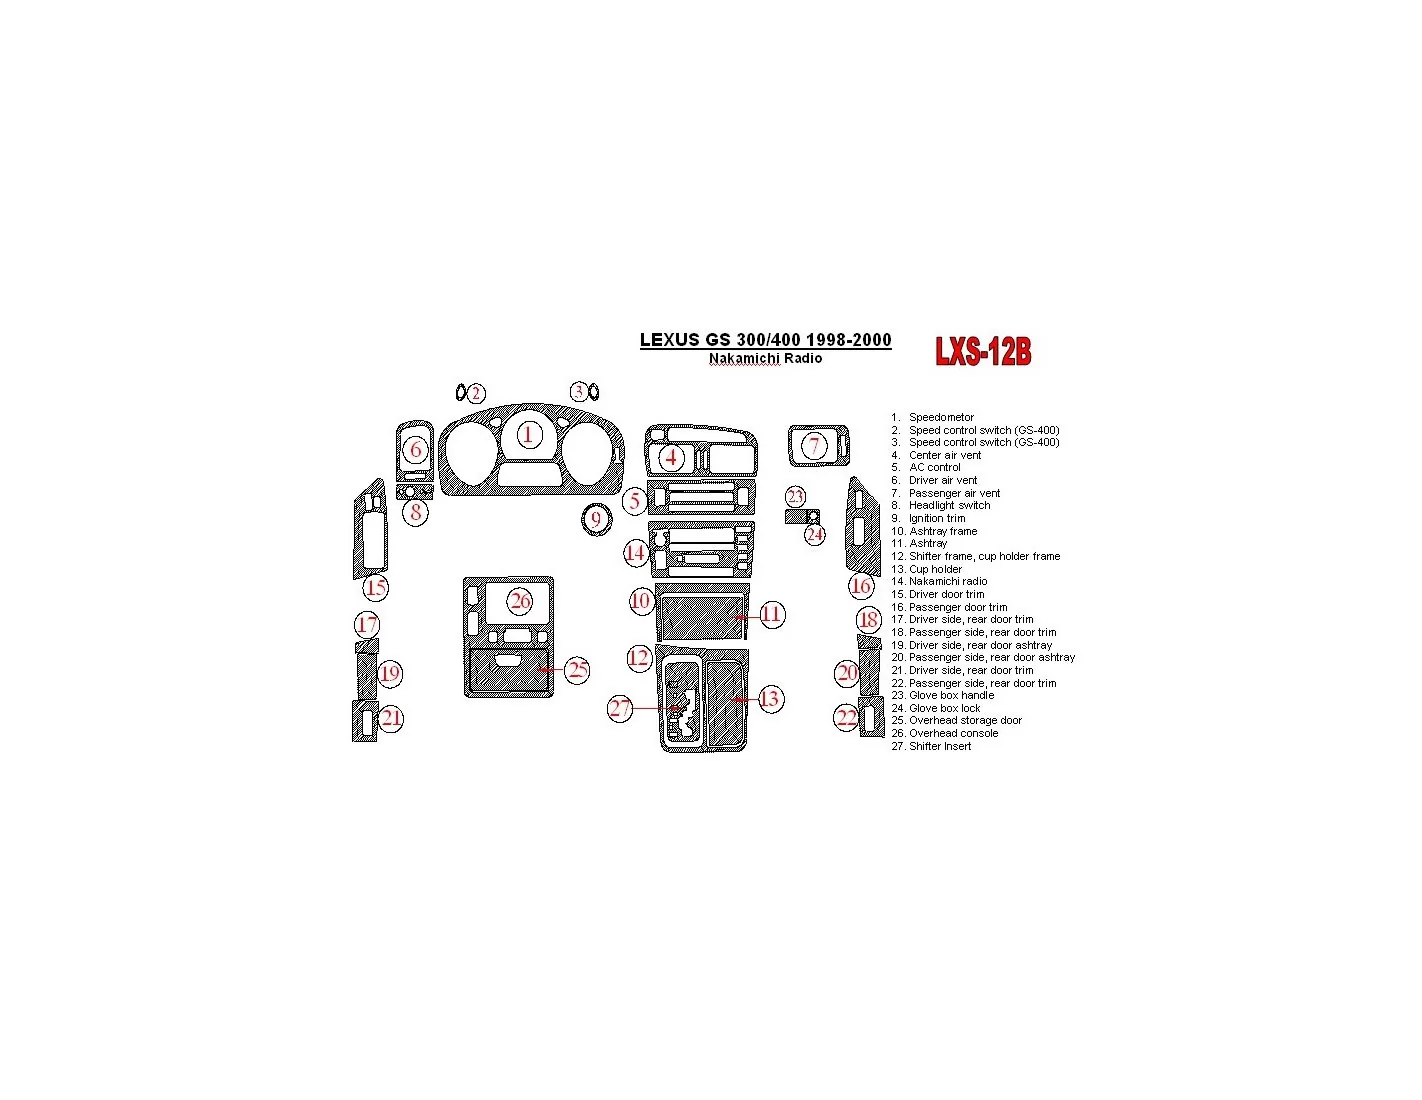 Lexus GS 1998-2000 Nakamichi Radio, OEM Compliance, 26 Parts set Cruscotto BD Rivestimenti interni